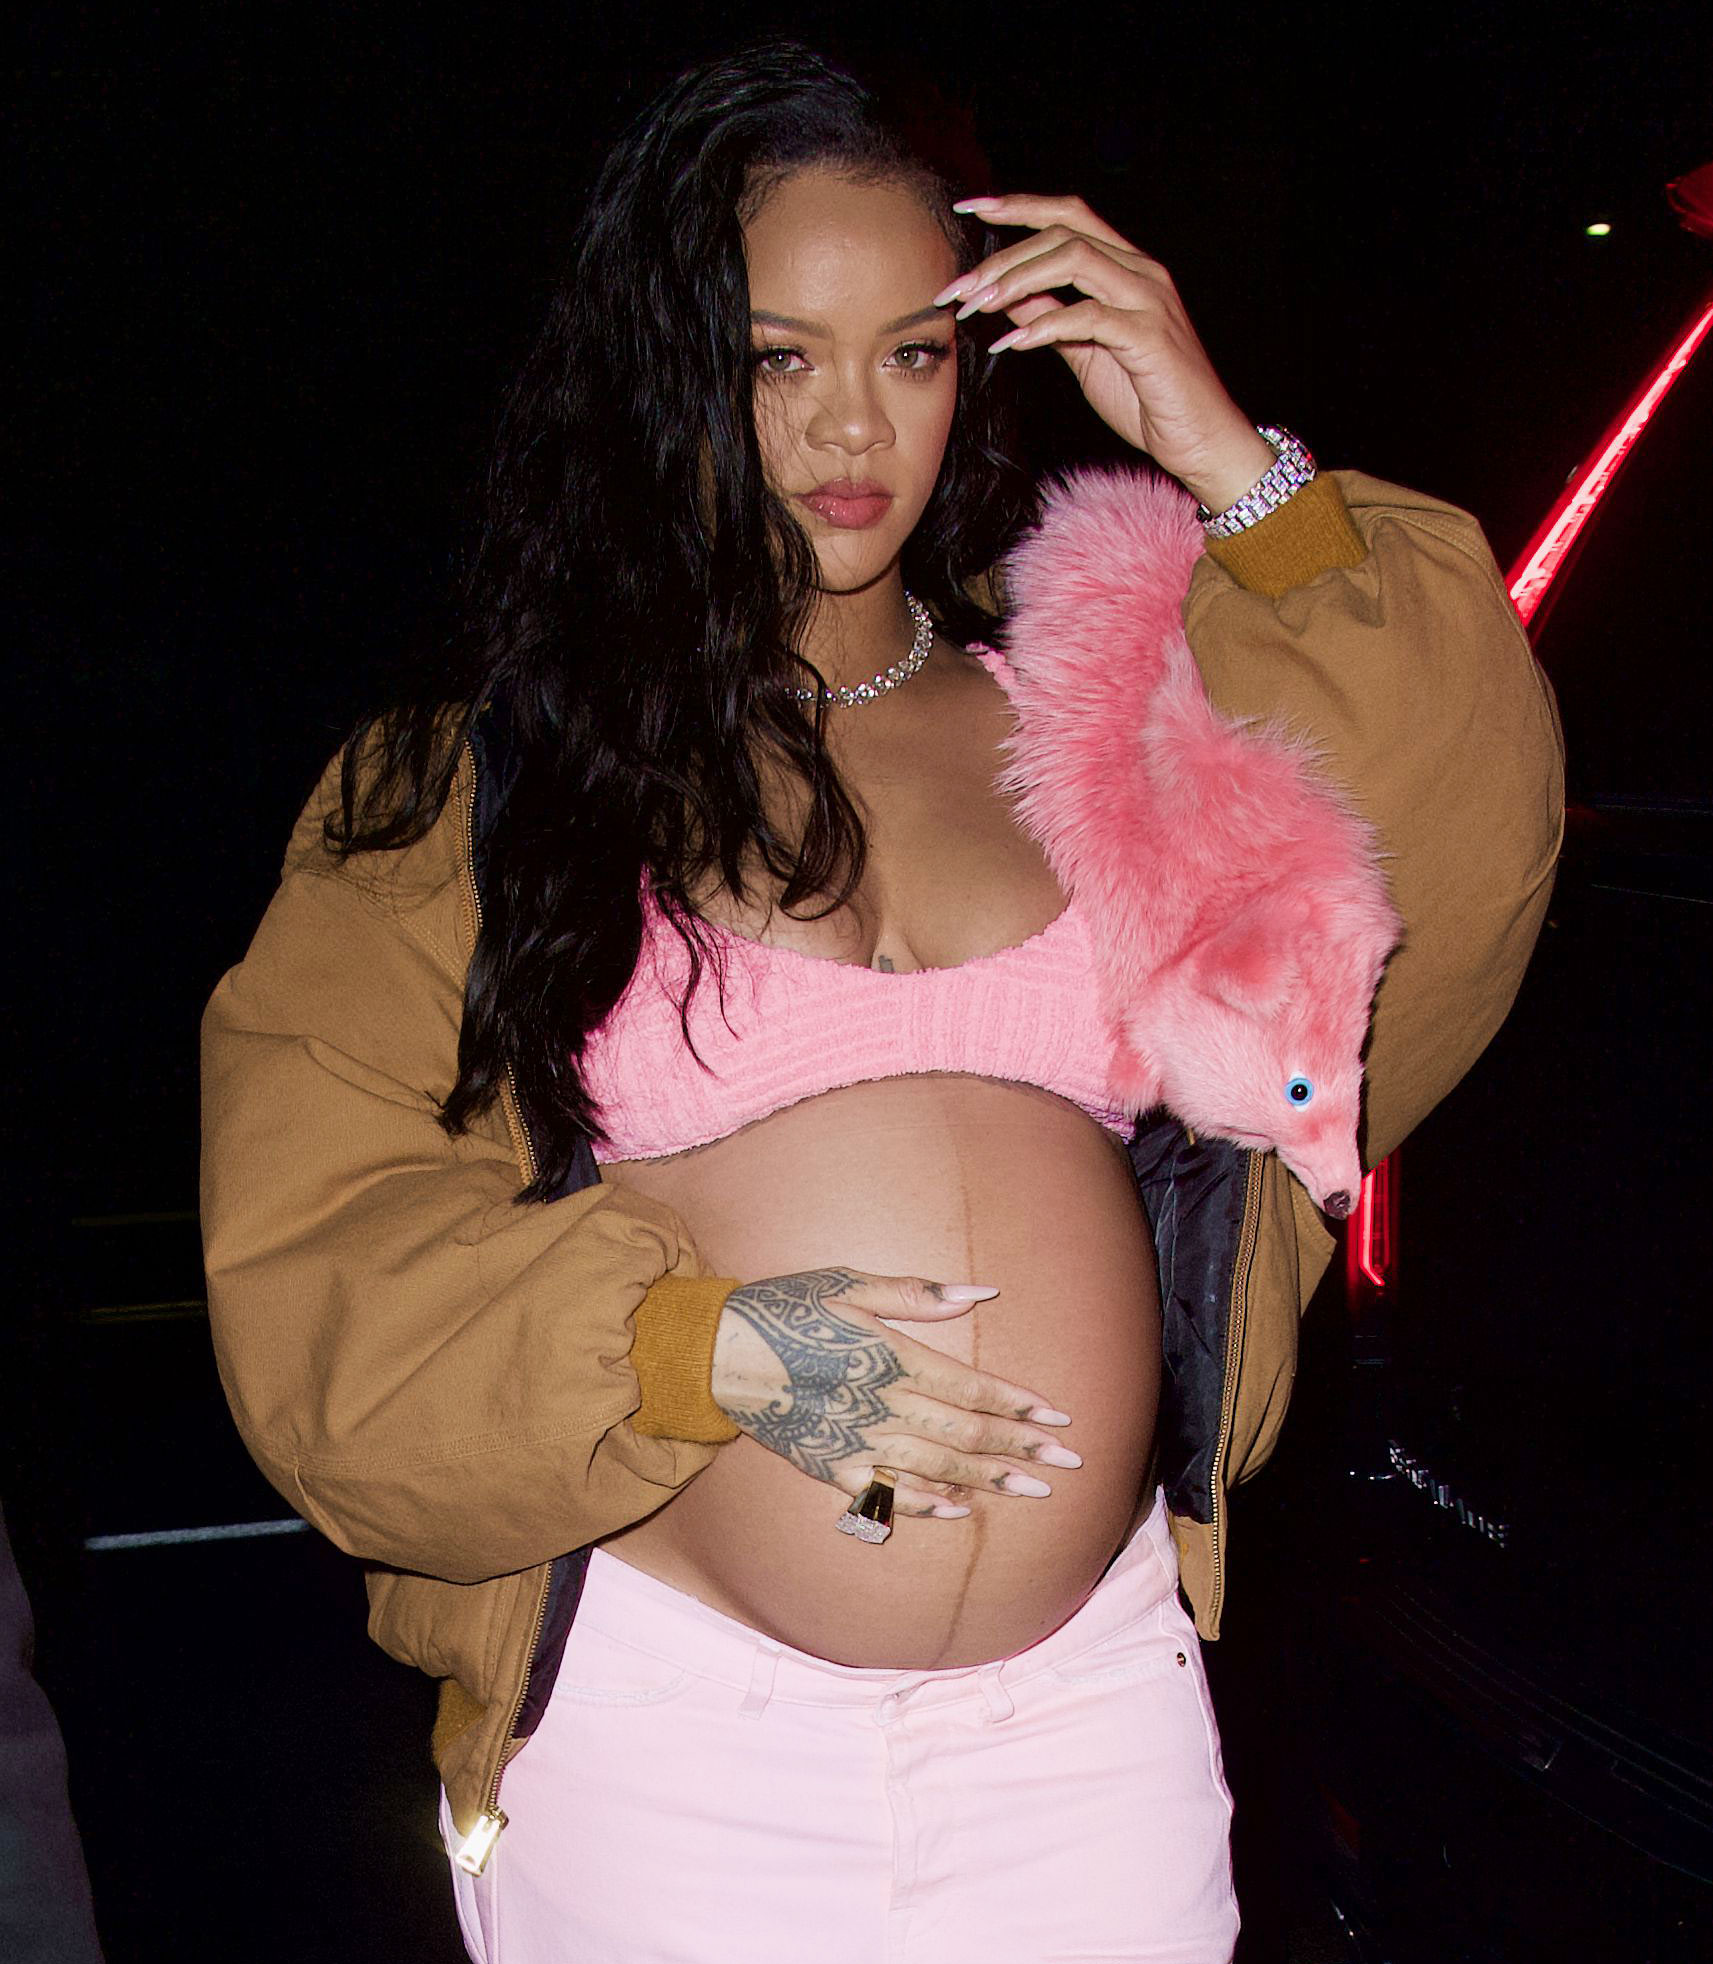 Pregnant Rihannas Baby Bump Album Ahead of 1st Child Photos